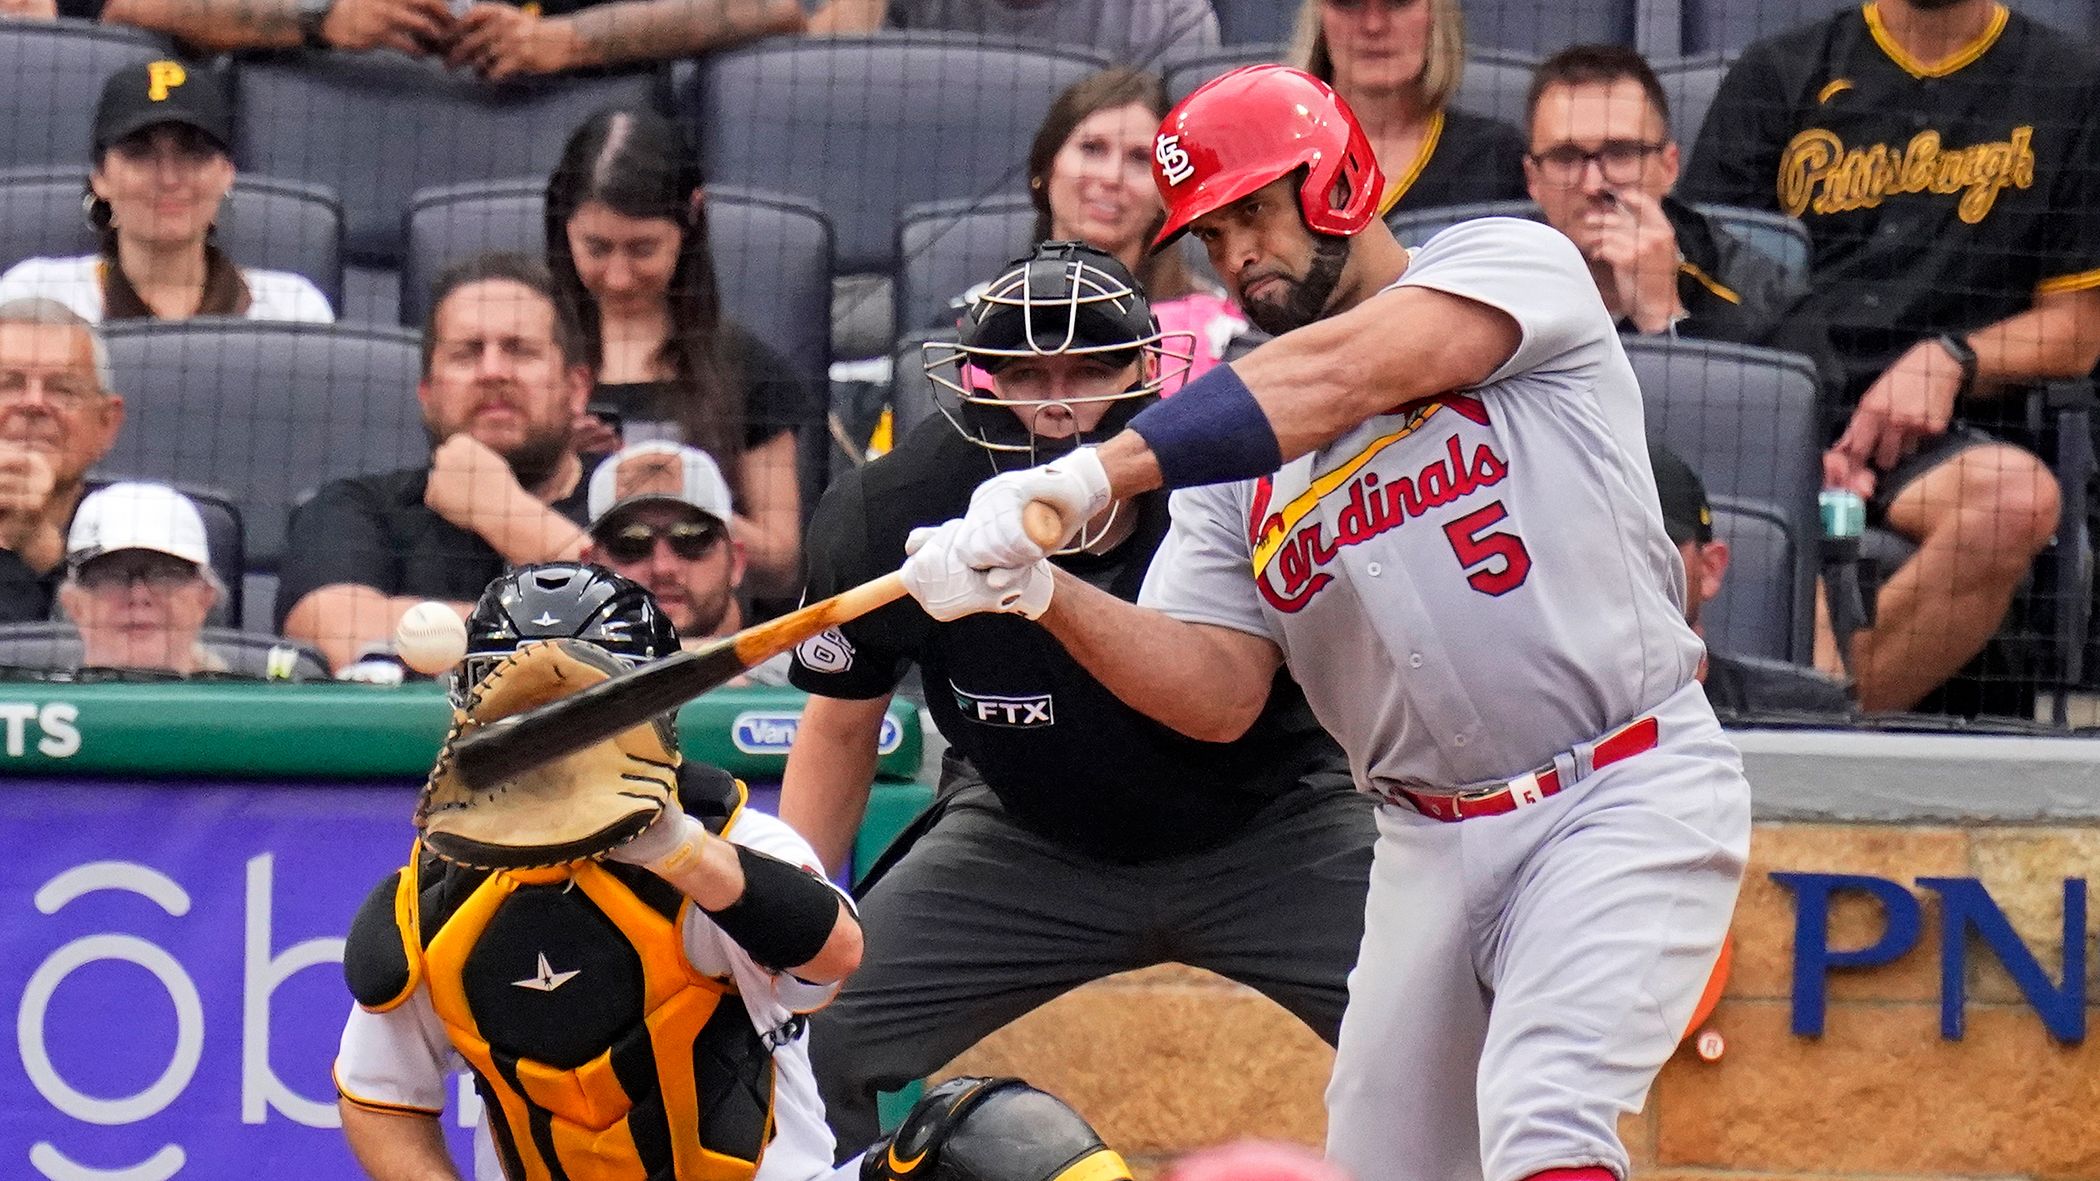 Yadi pitches, Pujols hits 2 HRs, Cardinals beat Pirates